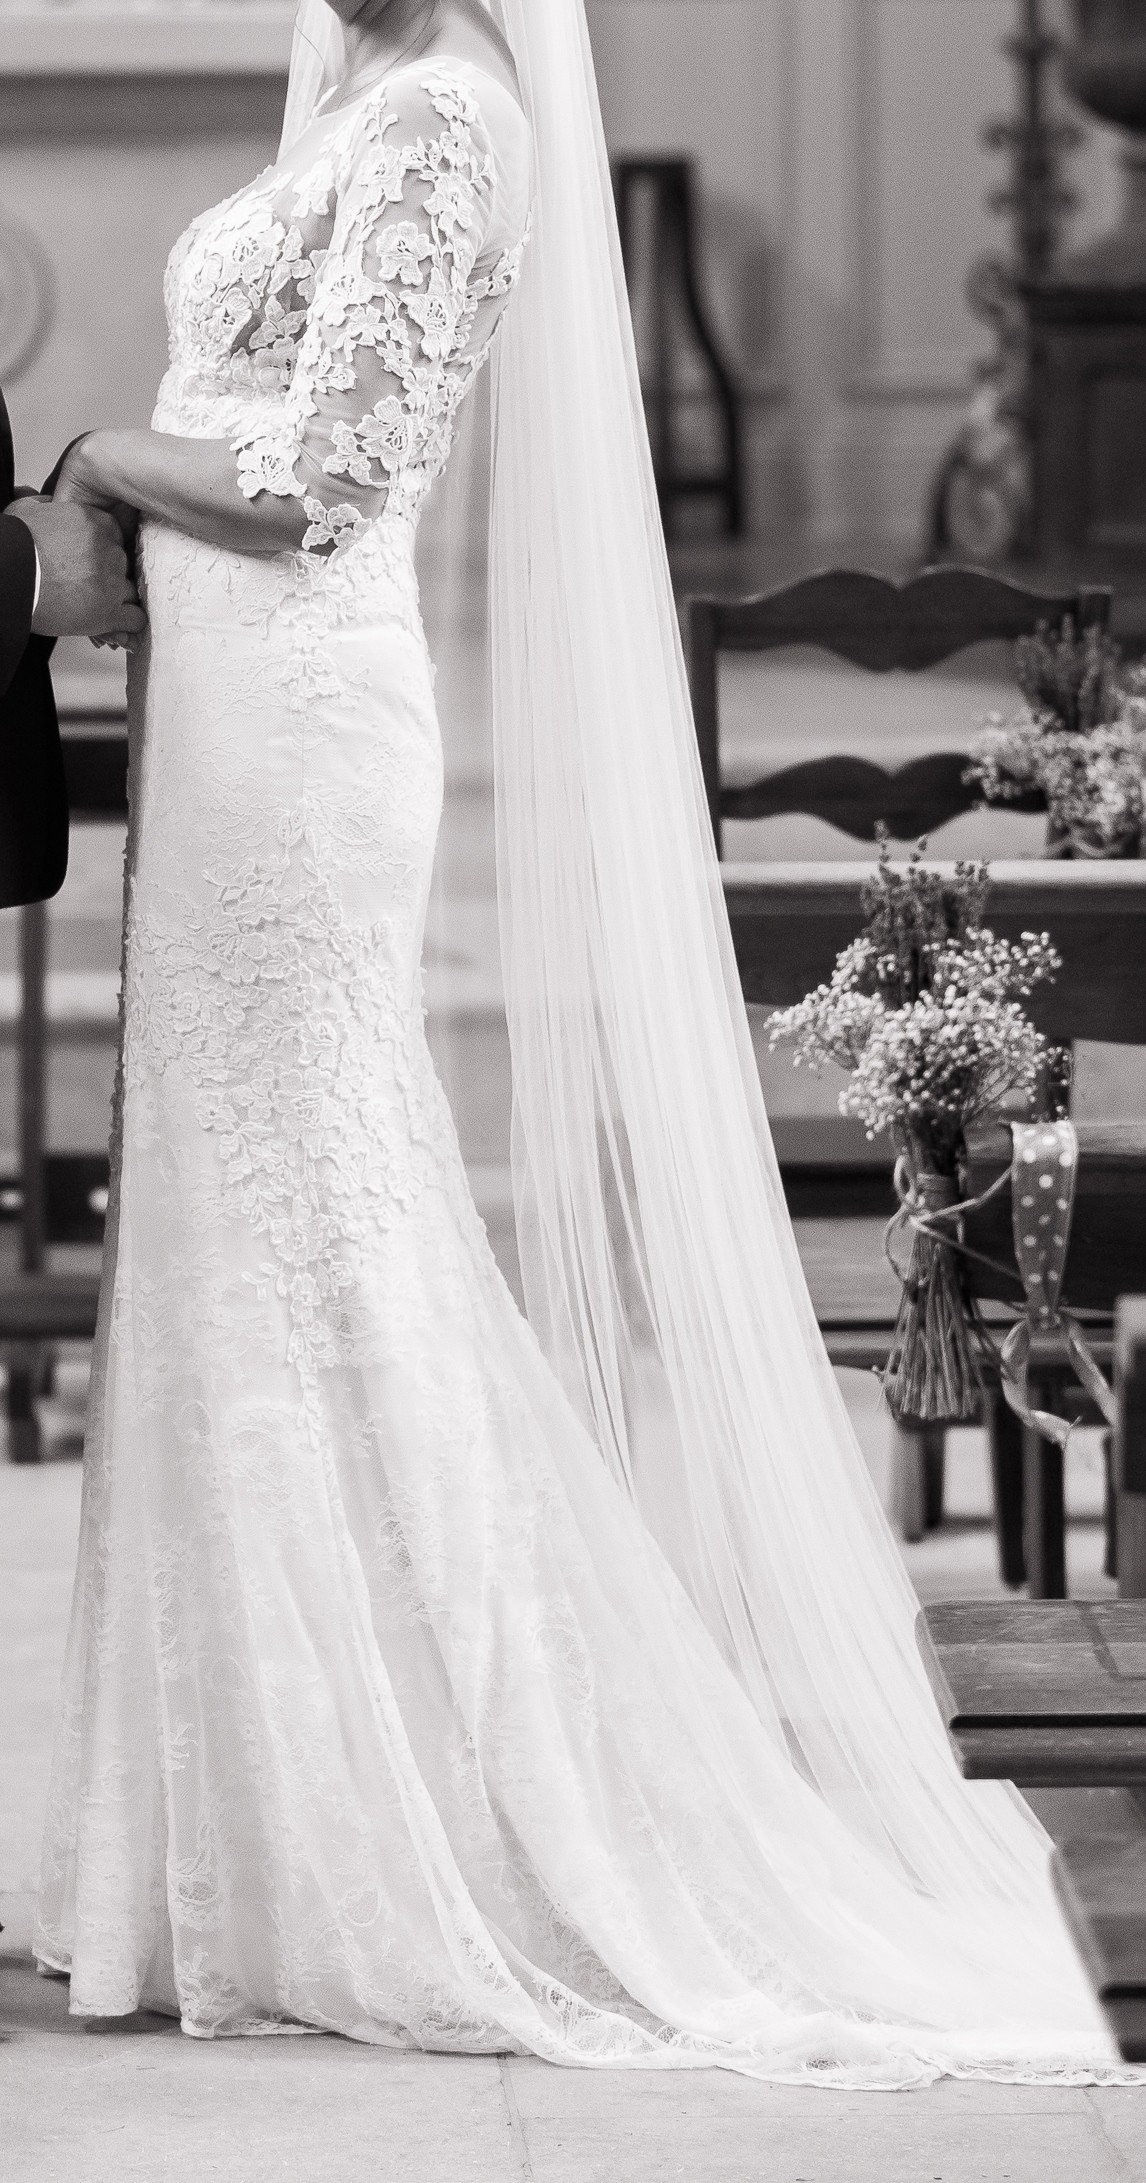  Blackburn  Bridal  Preowned Wedding  Dress  on Sale 74 Off 